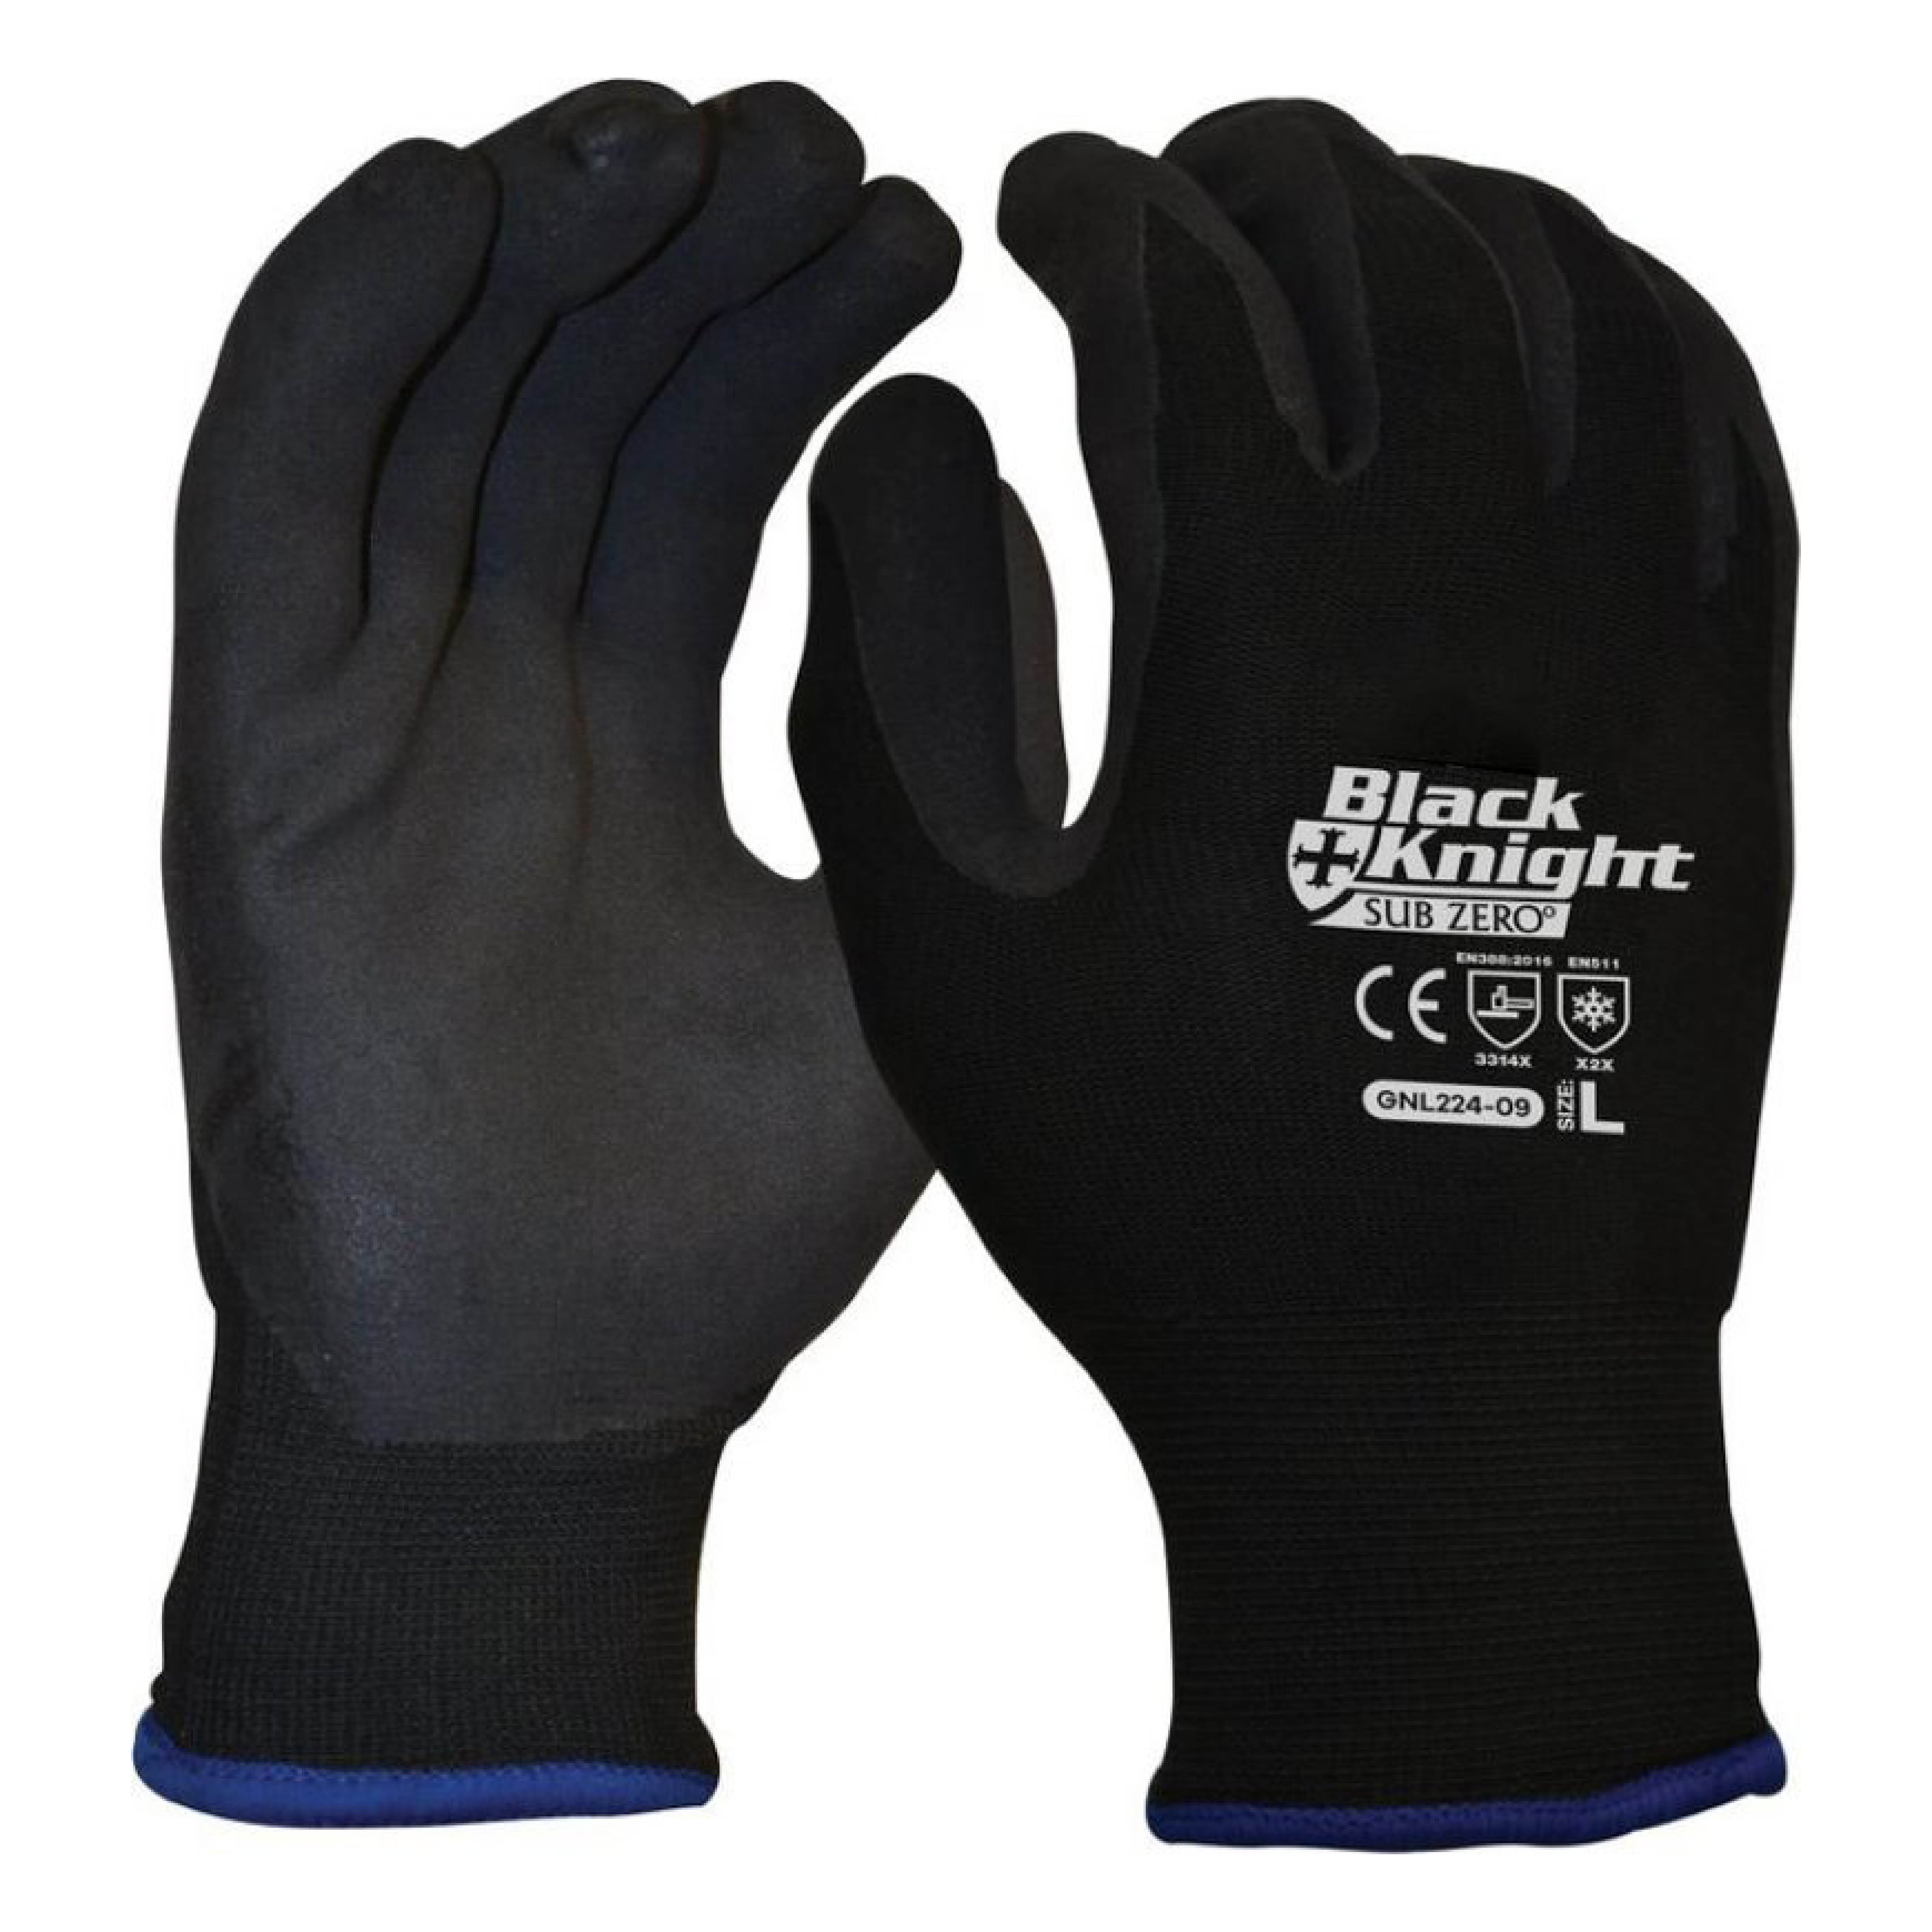 Black Knight Sub Zero Thermal Glove XLarge Size 10 (1 pair)